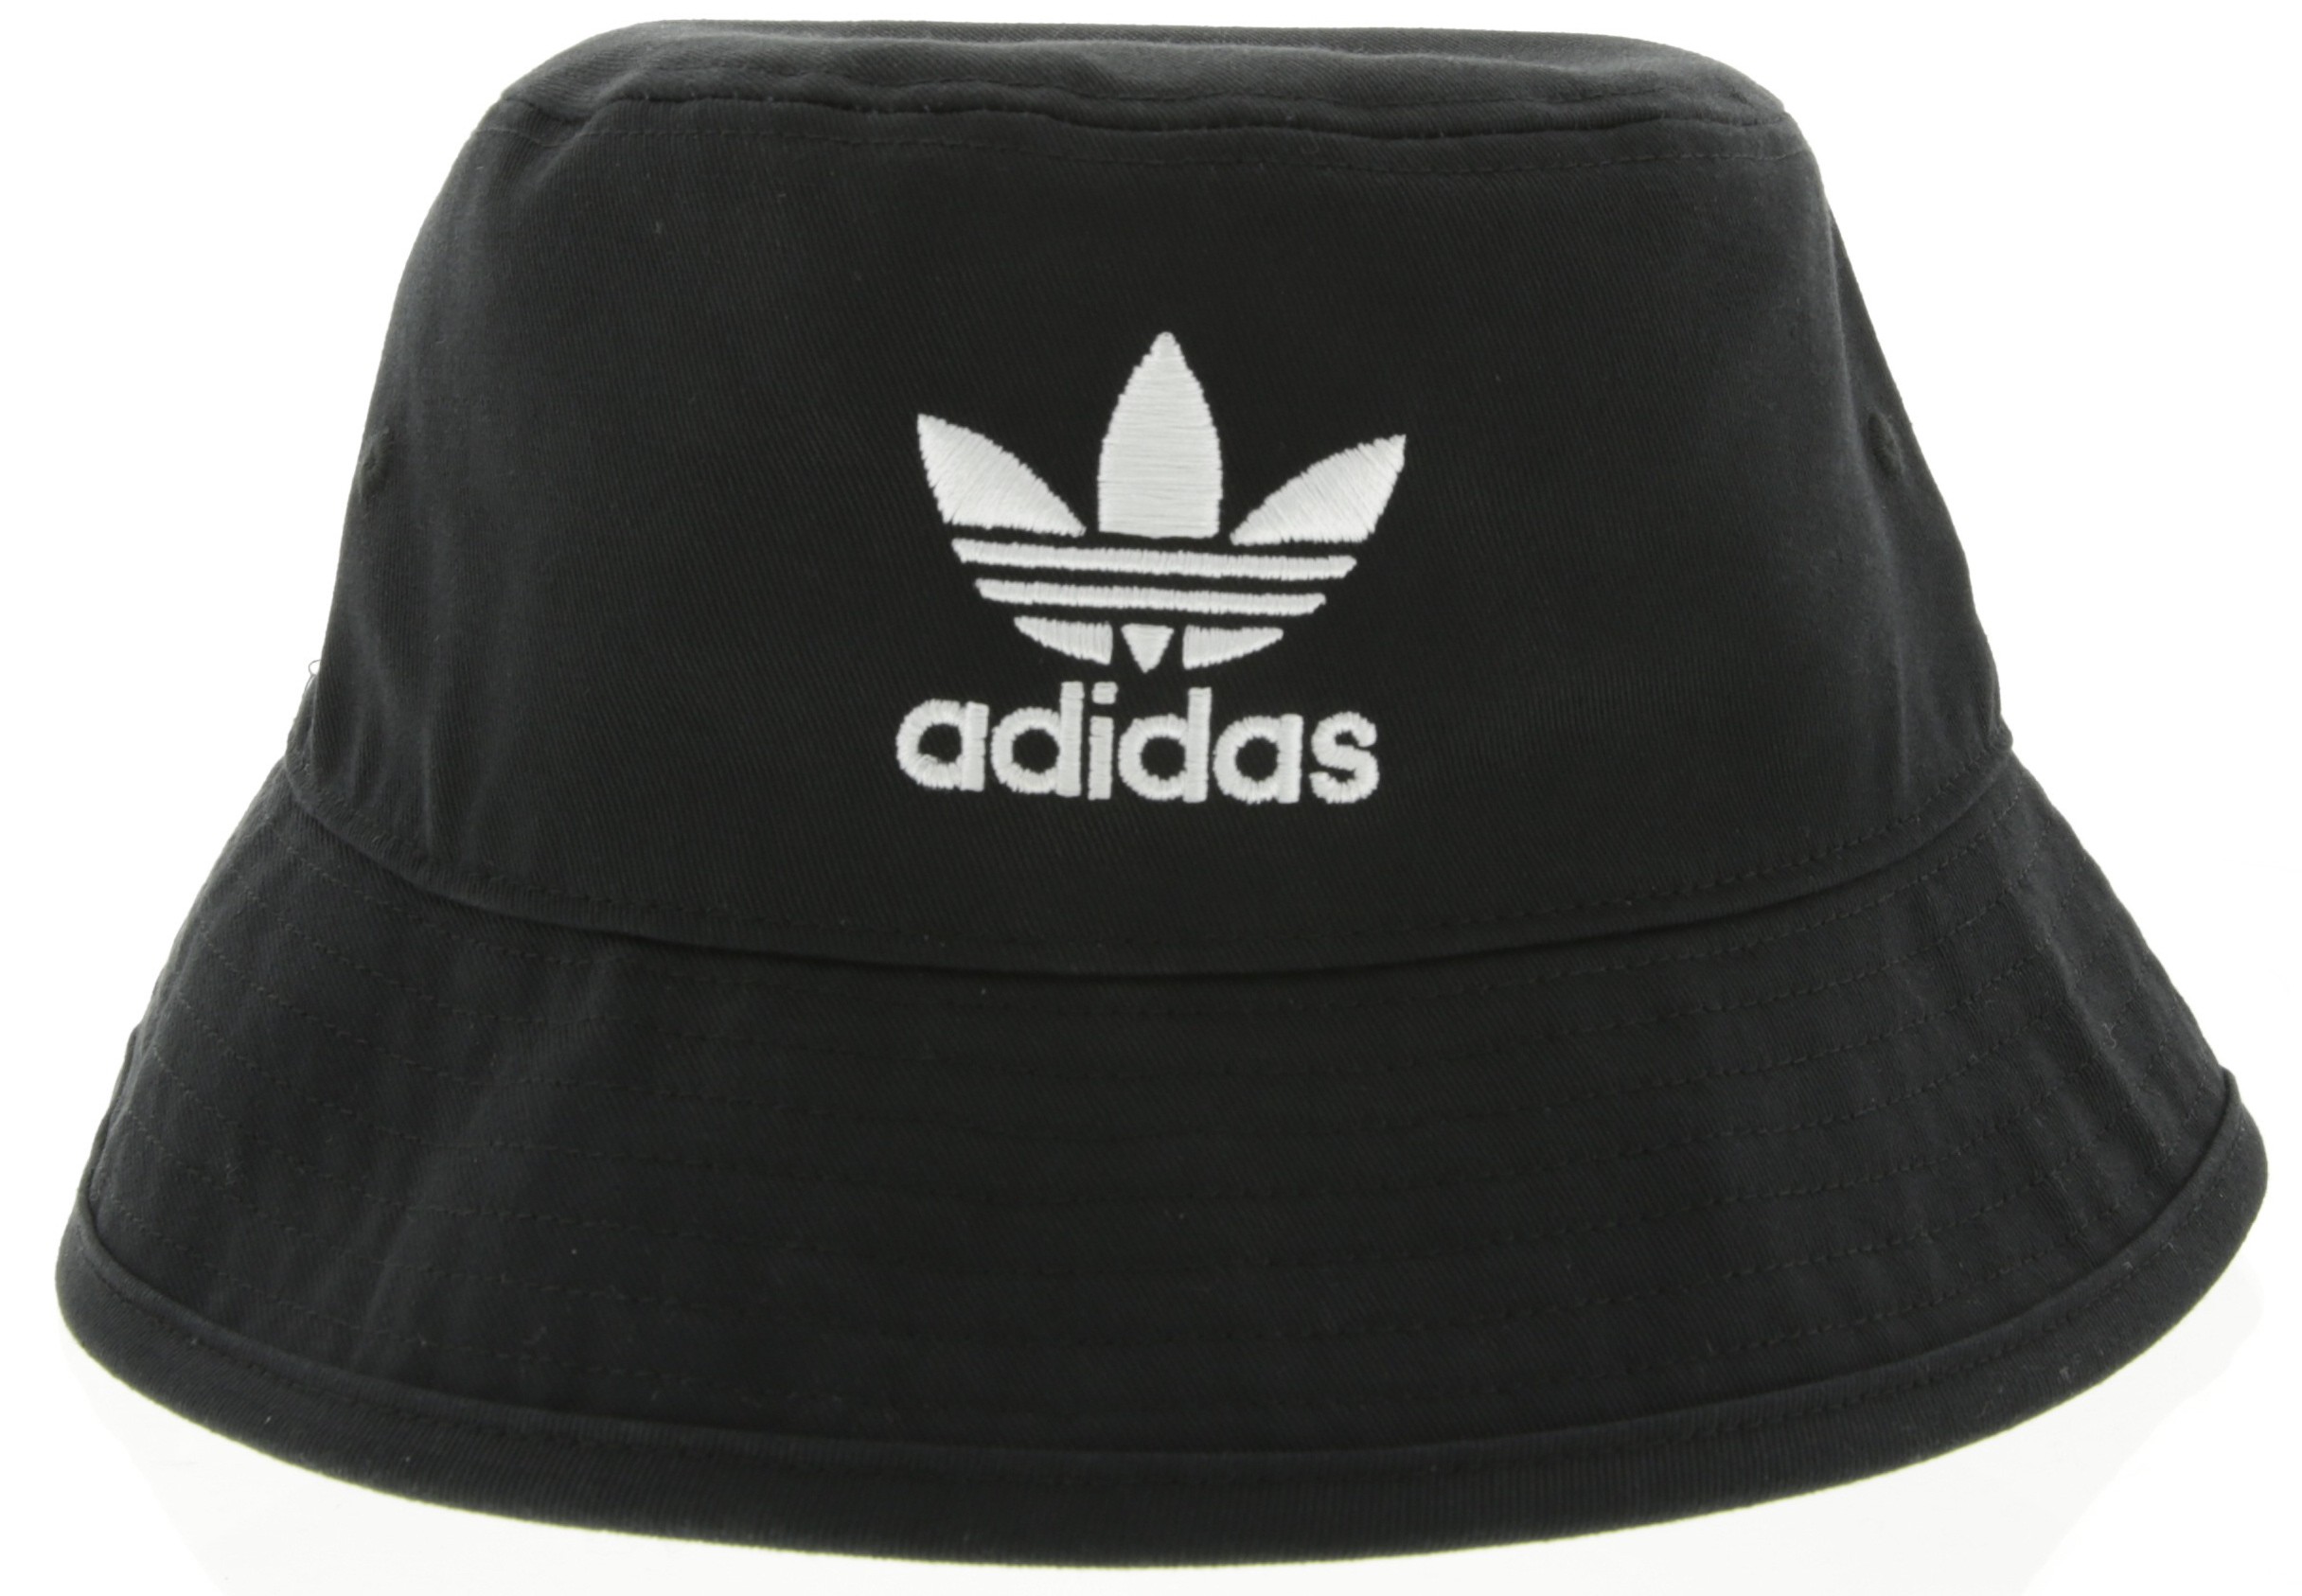 adidas bucket hat in black GLVBAMW